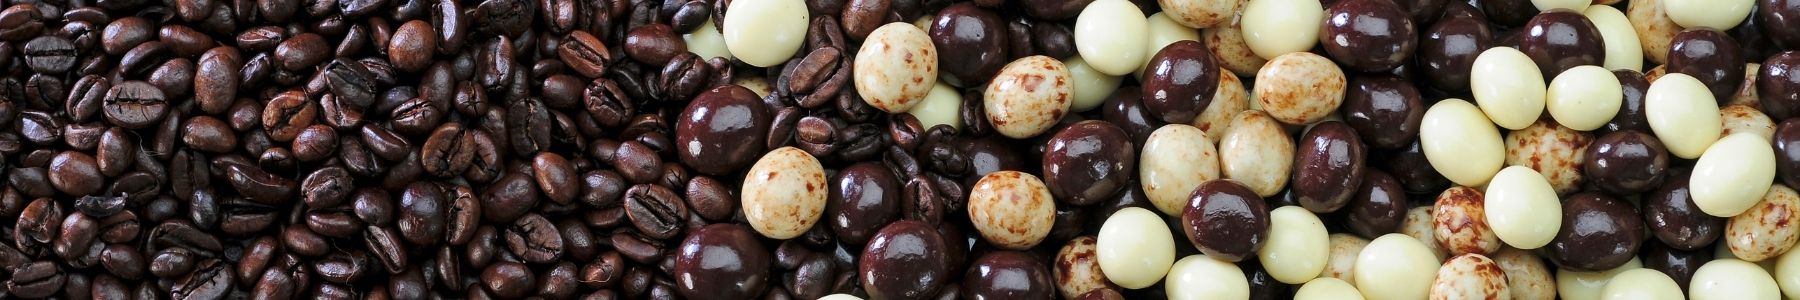 Dilettante Chocolates Chocolate-Covered Espresso Bean Header Featuring Espresso Beans in White, Milk, Dark, and Marbled Chocolate